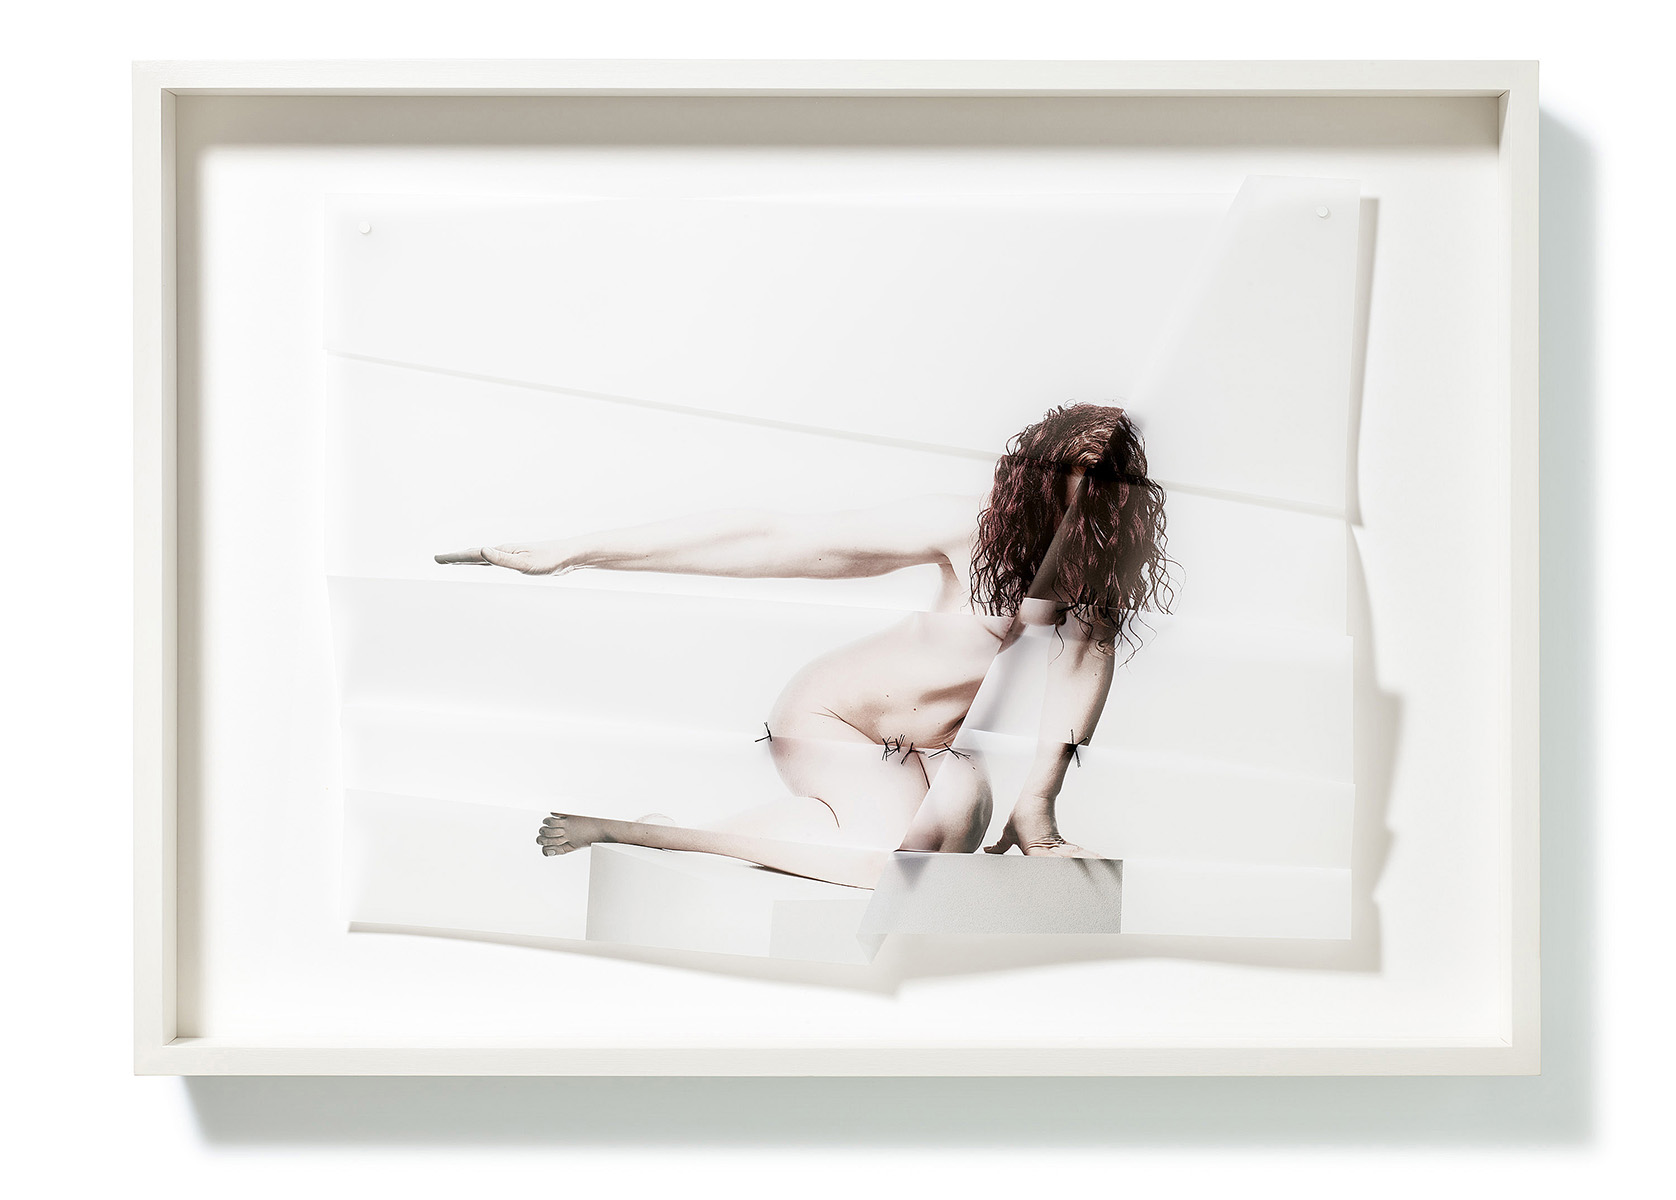 Zur Figur 09, 202050 x 70 x 7,5 cmPhotography, pigment print on transparent paper, sewed; framed